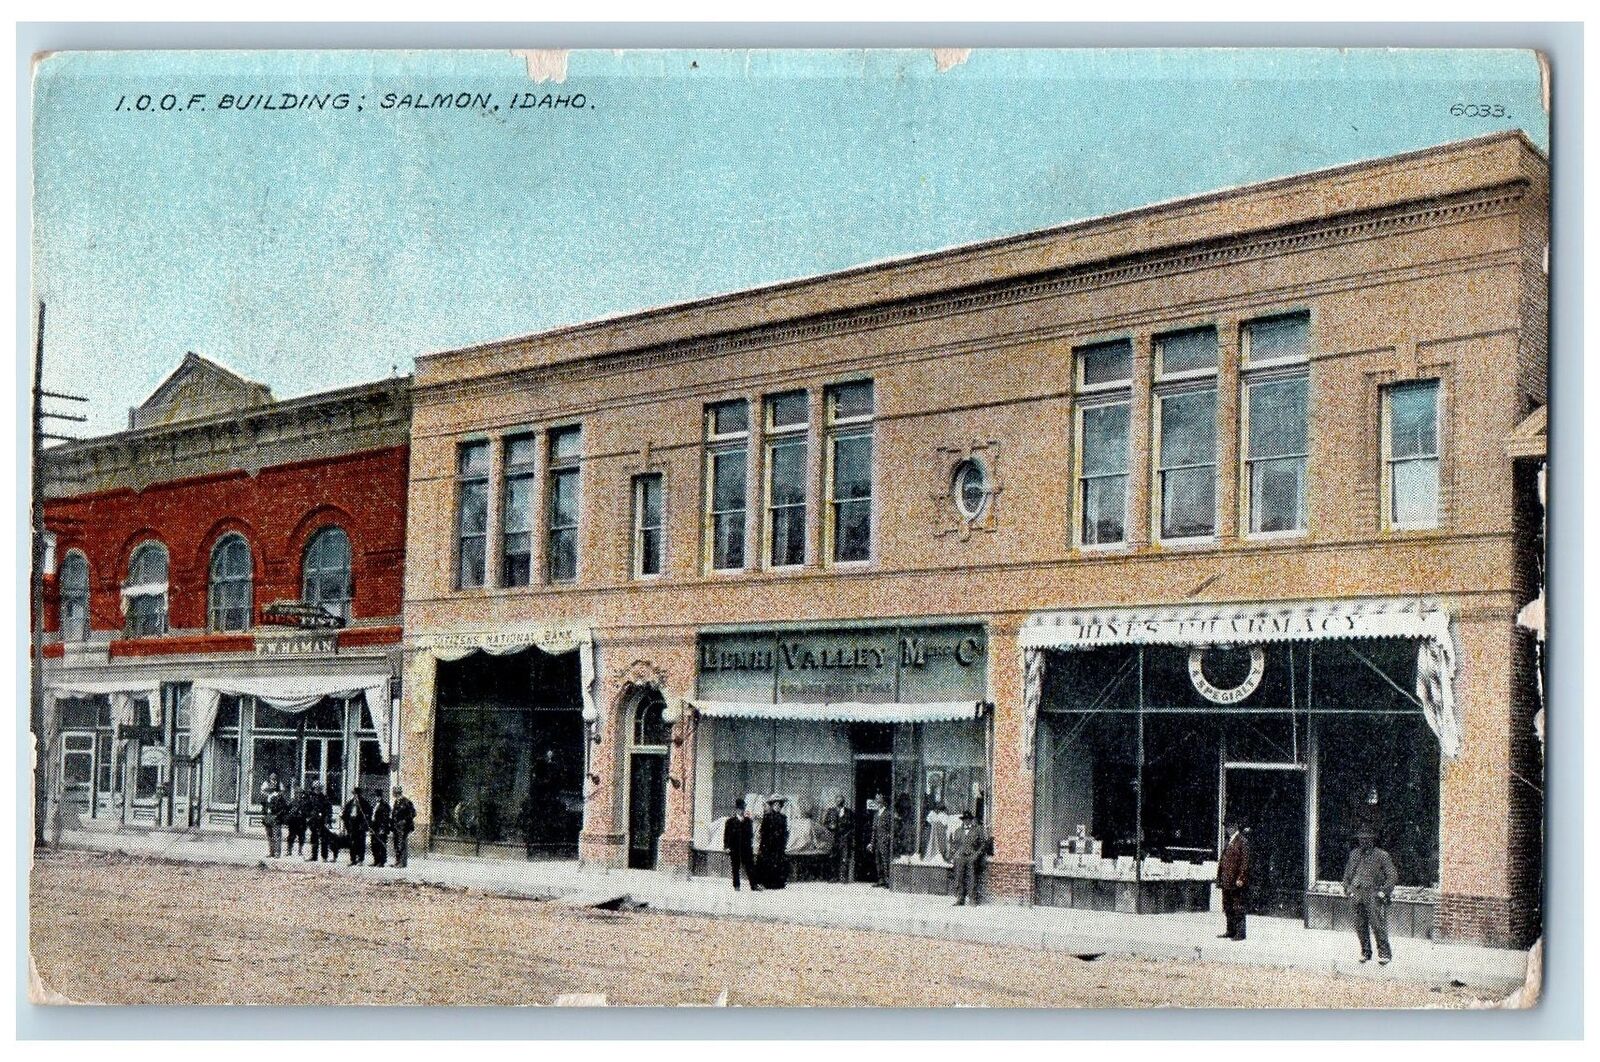 1913 IOOF Building Dirt Road Town People Building Salmon Idaho Antique Postcard